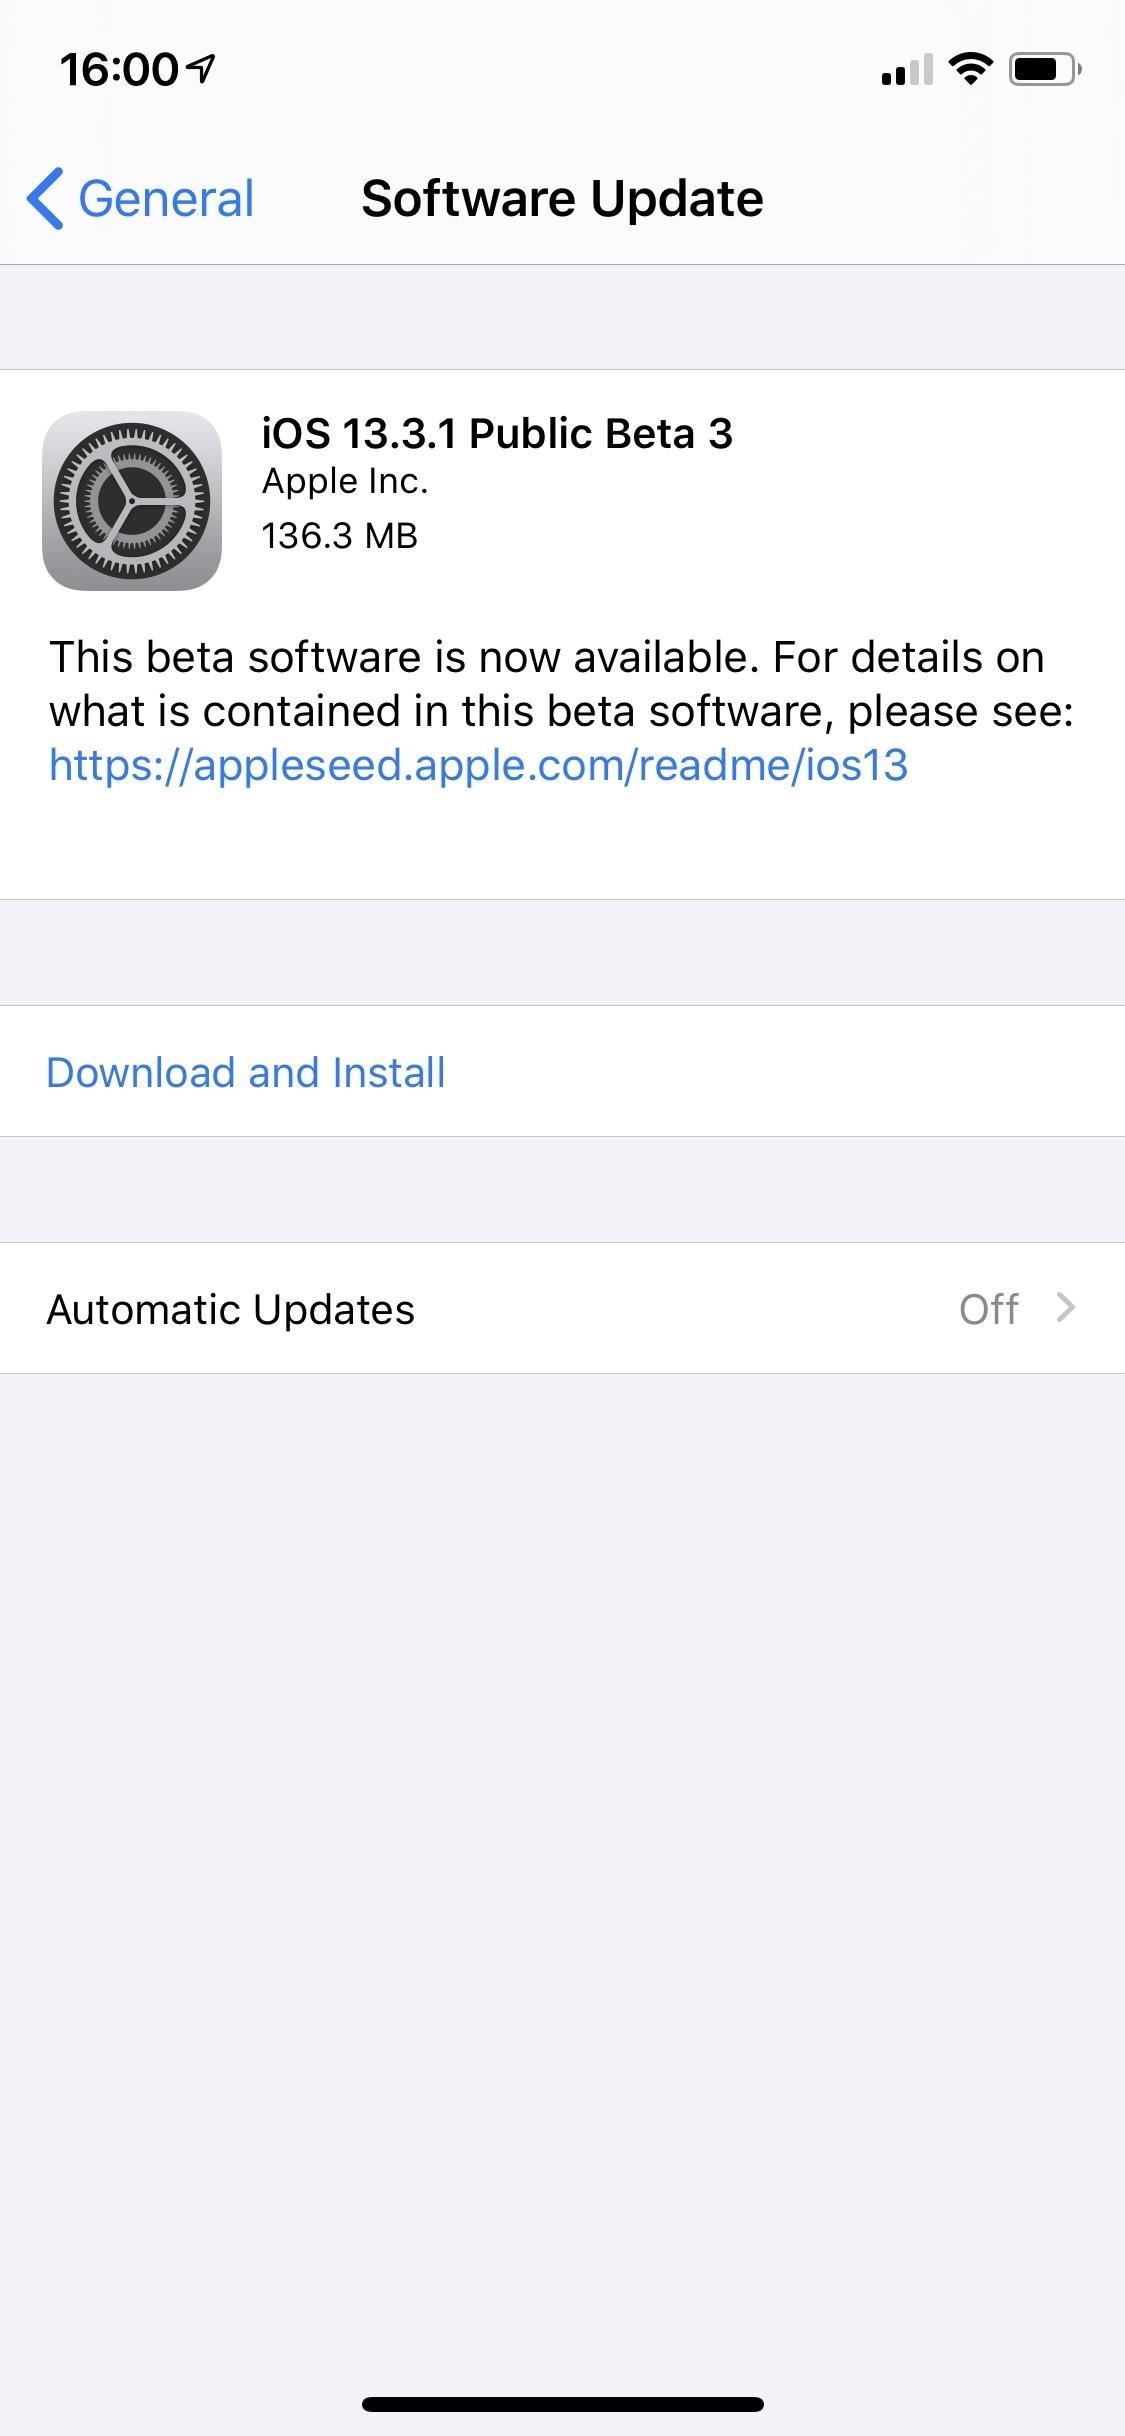 Apple Releases iOS 13.3.1 Public Beta 3 for iPhone